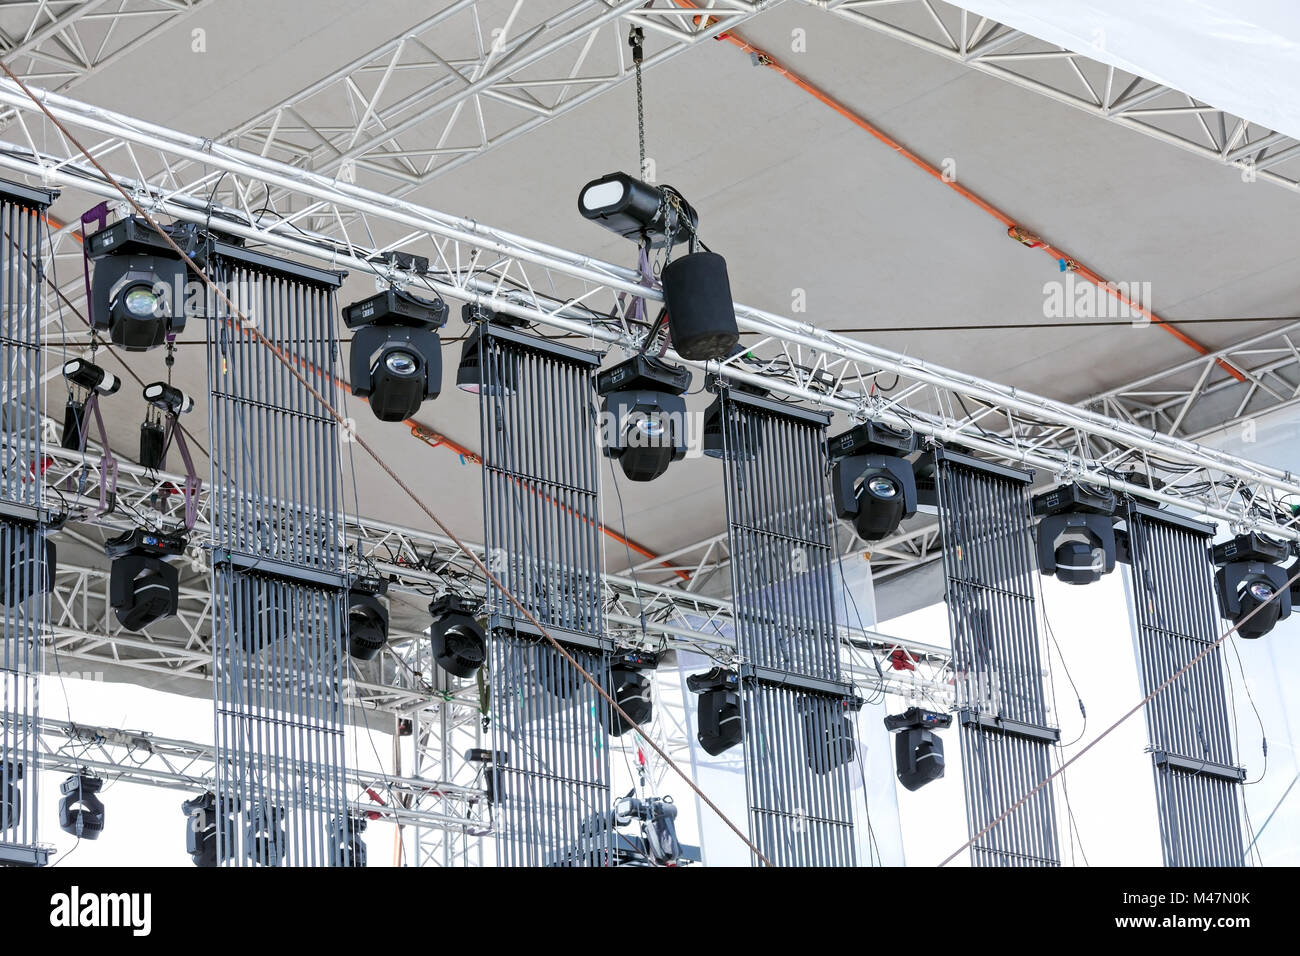 concert lighting equipment on stage Stock Photo